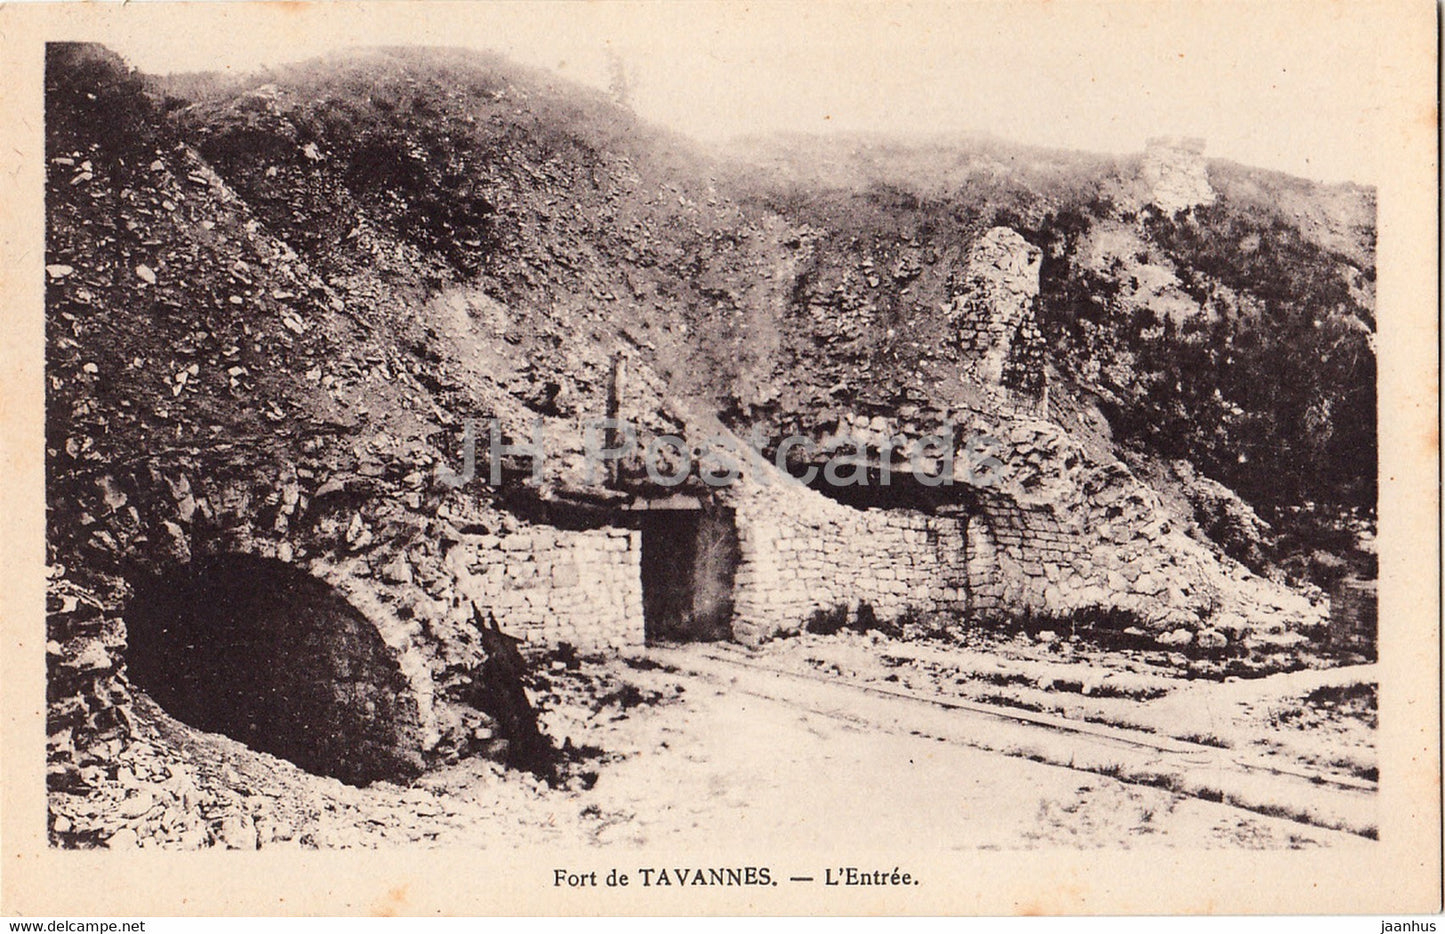 Fort de Tavannes - L'Entree - military - WWI - old postcard - France - unused - JH Postcards